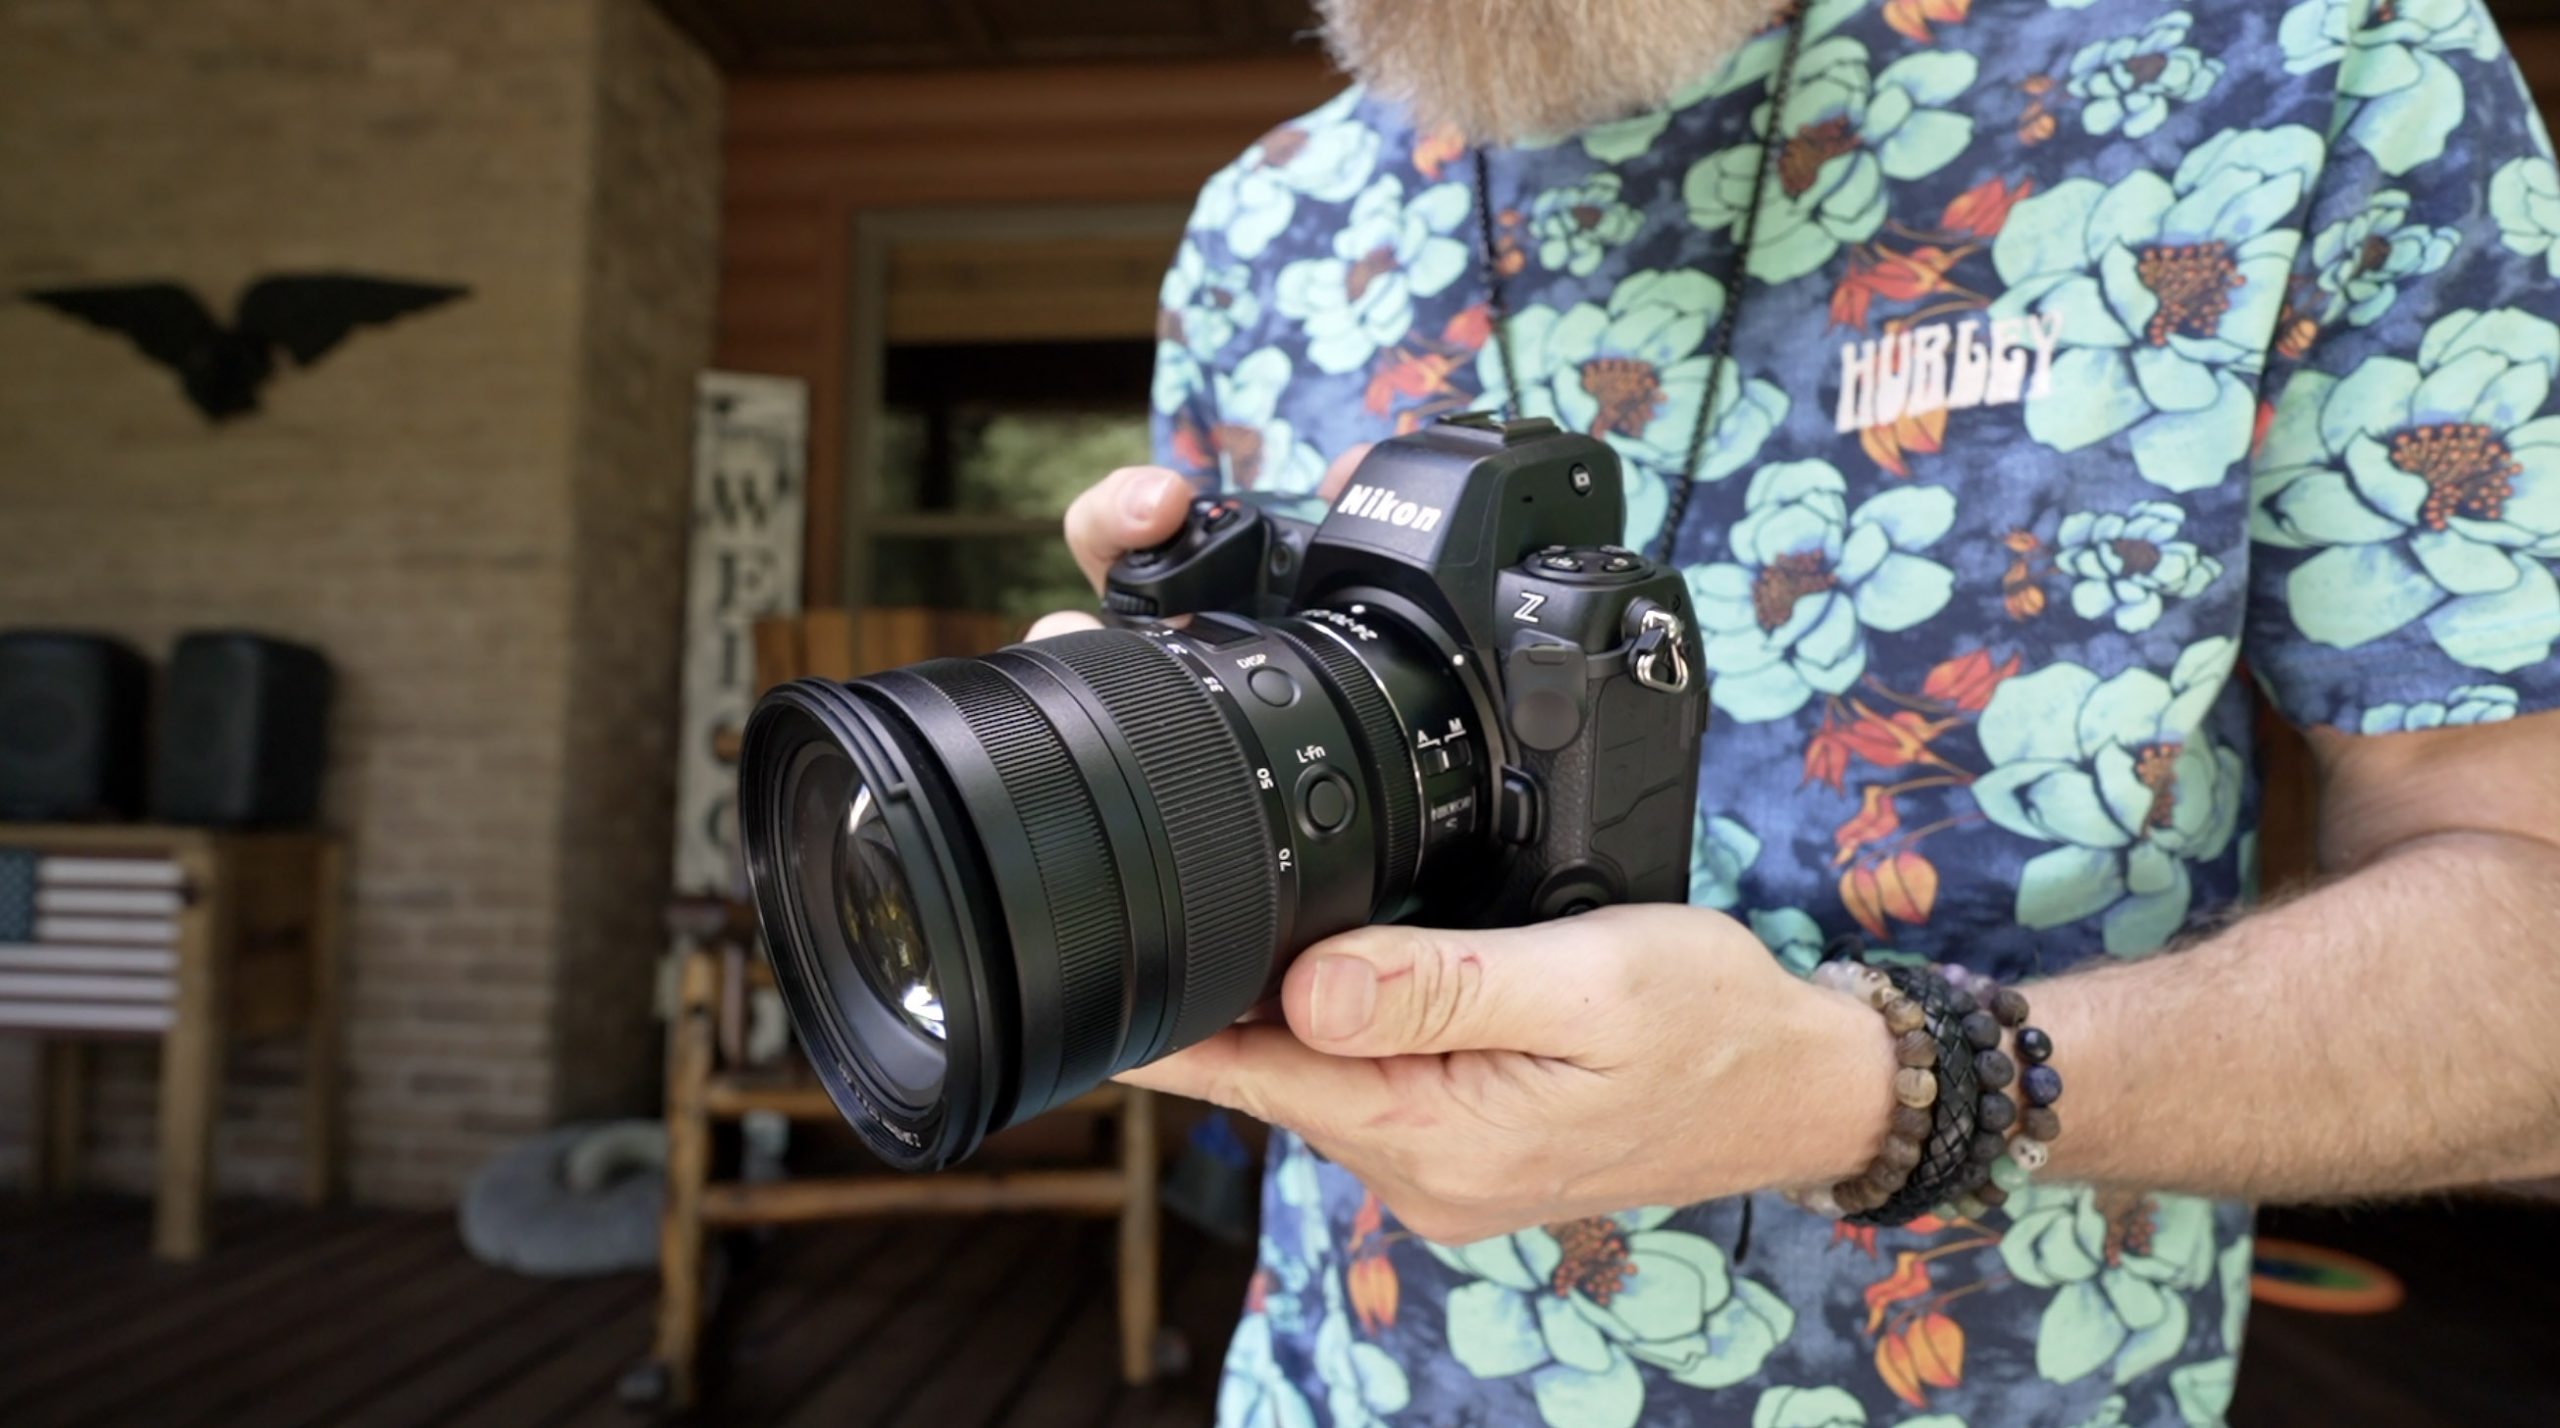 Nikon Z8 mirrorless camera review: Smaller, faster, cheaper, better